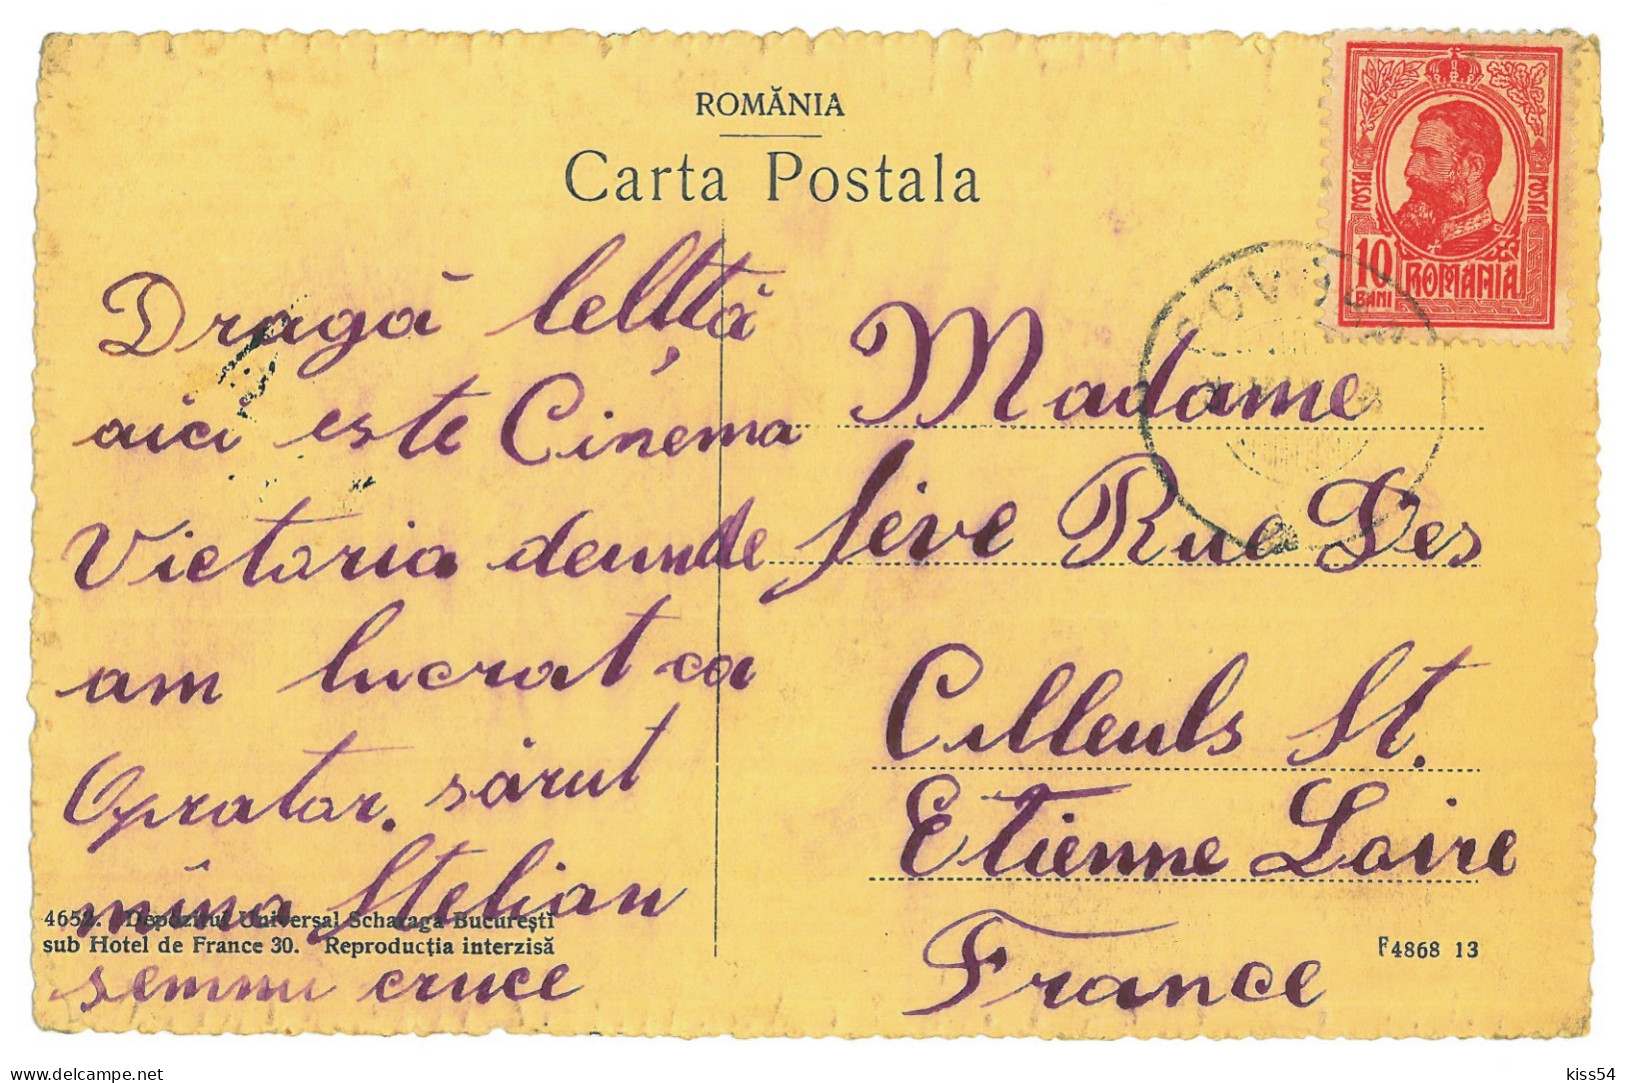 RO 83 - 24315 BUCURESTI, Caffe Royal, Romania - Old Postcard - Used - Romania